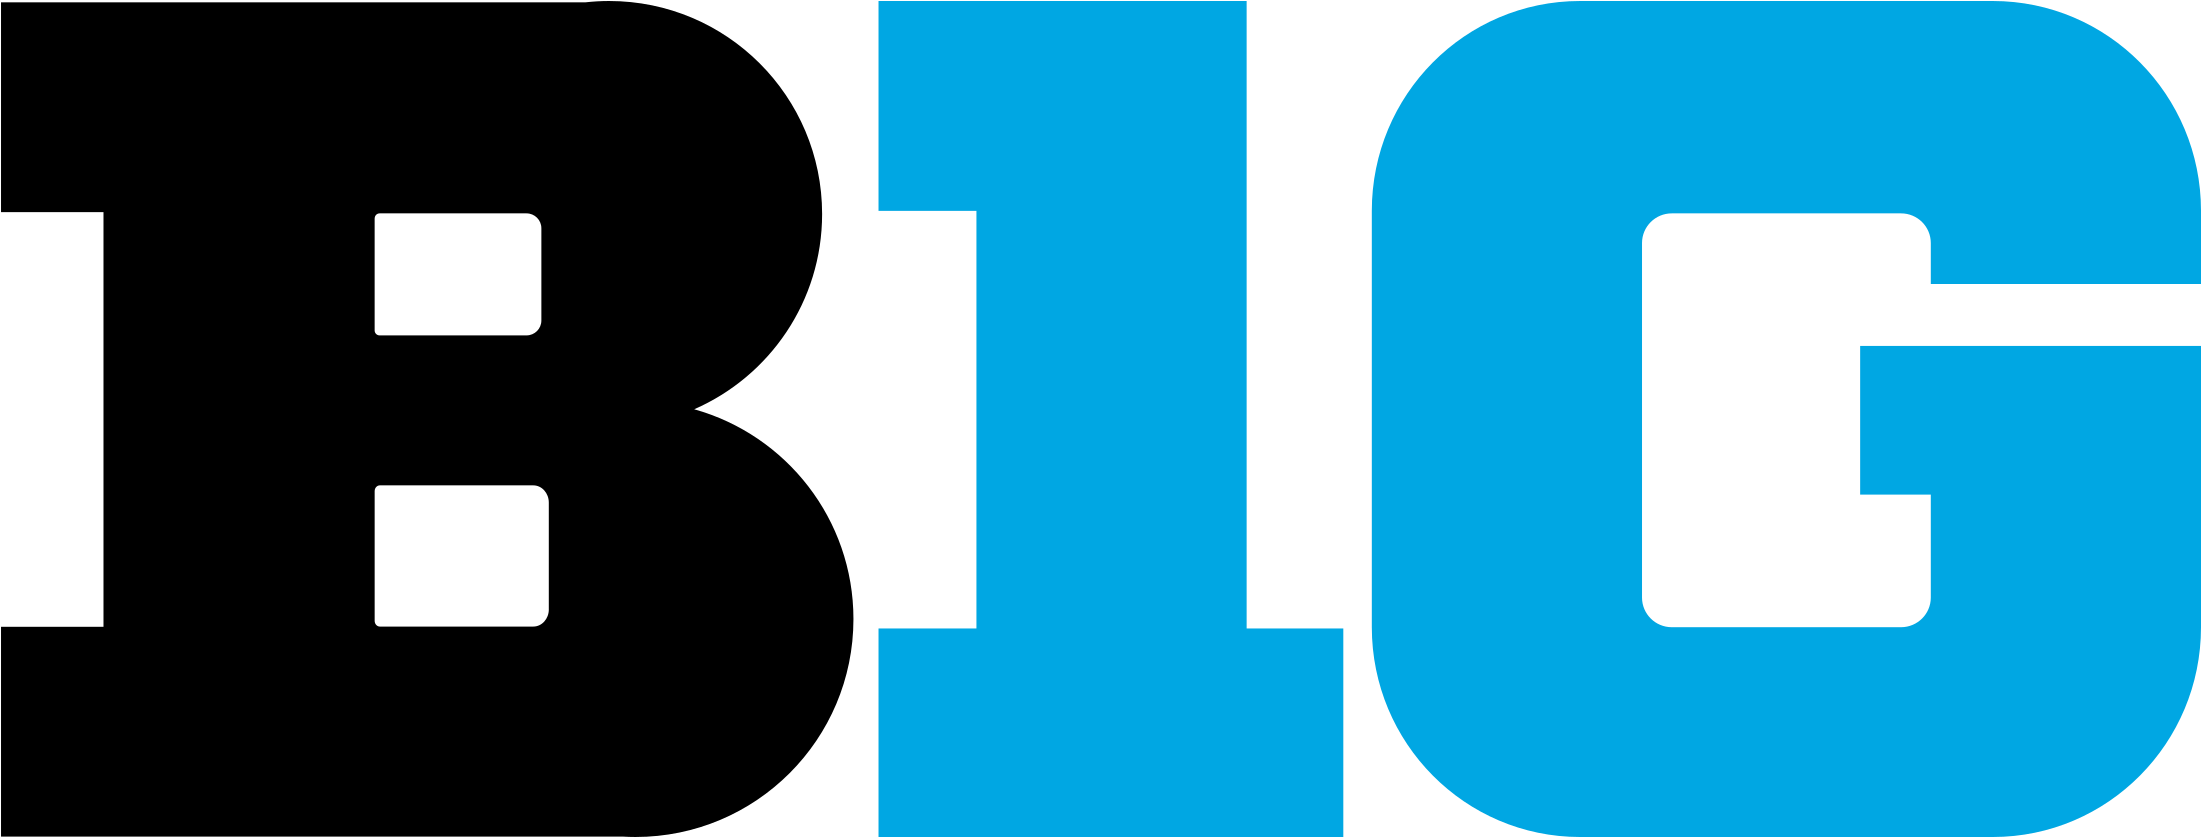 Saturday, December 1 - Big Ten Logo Png (2400x1036)